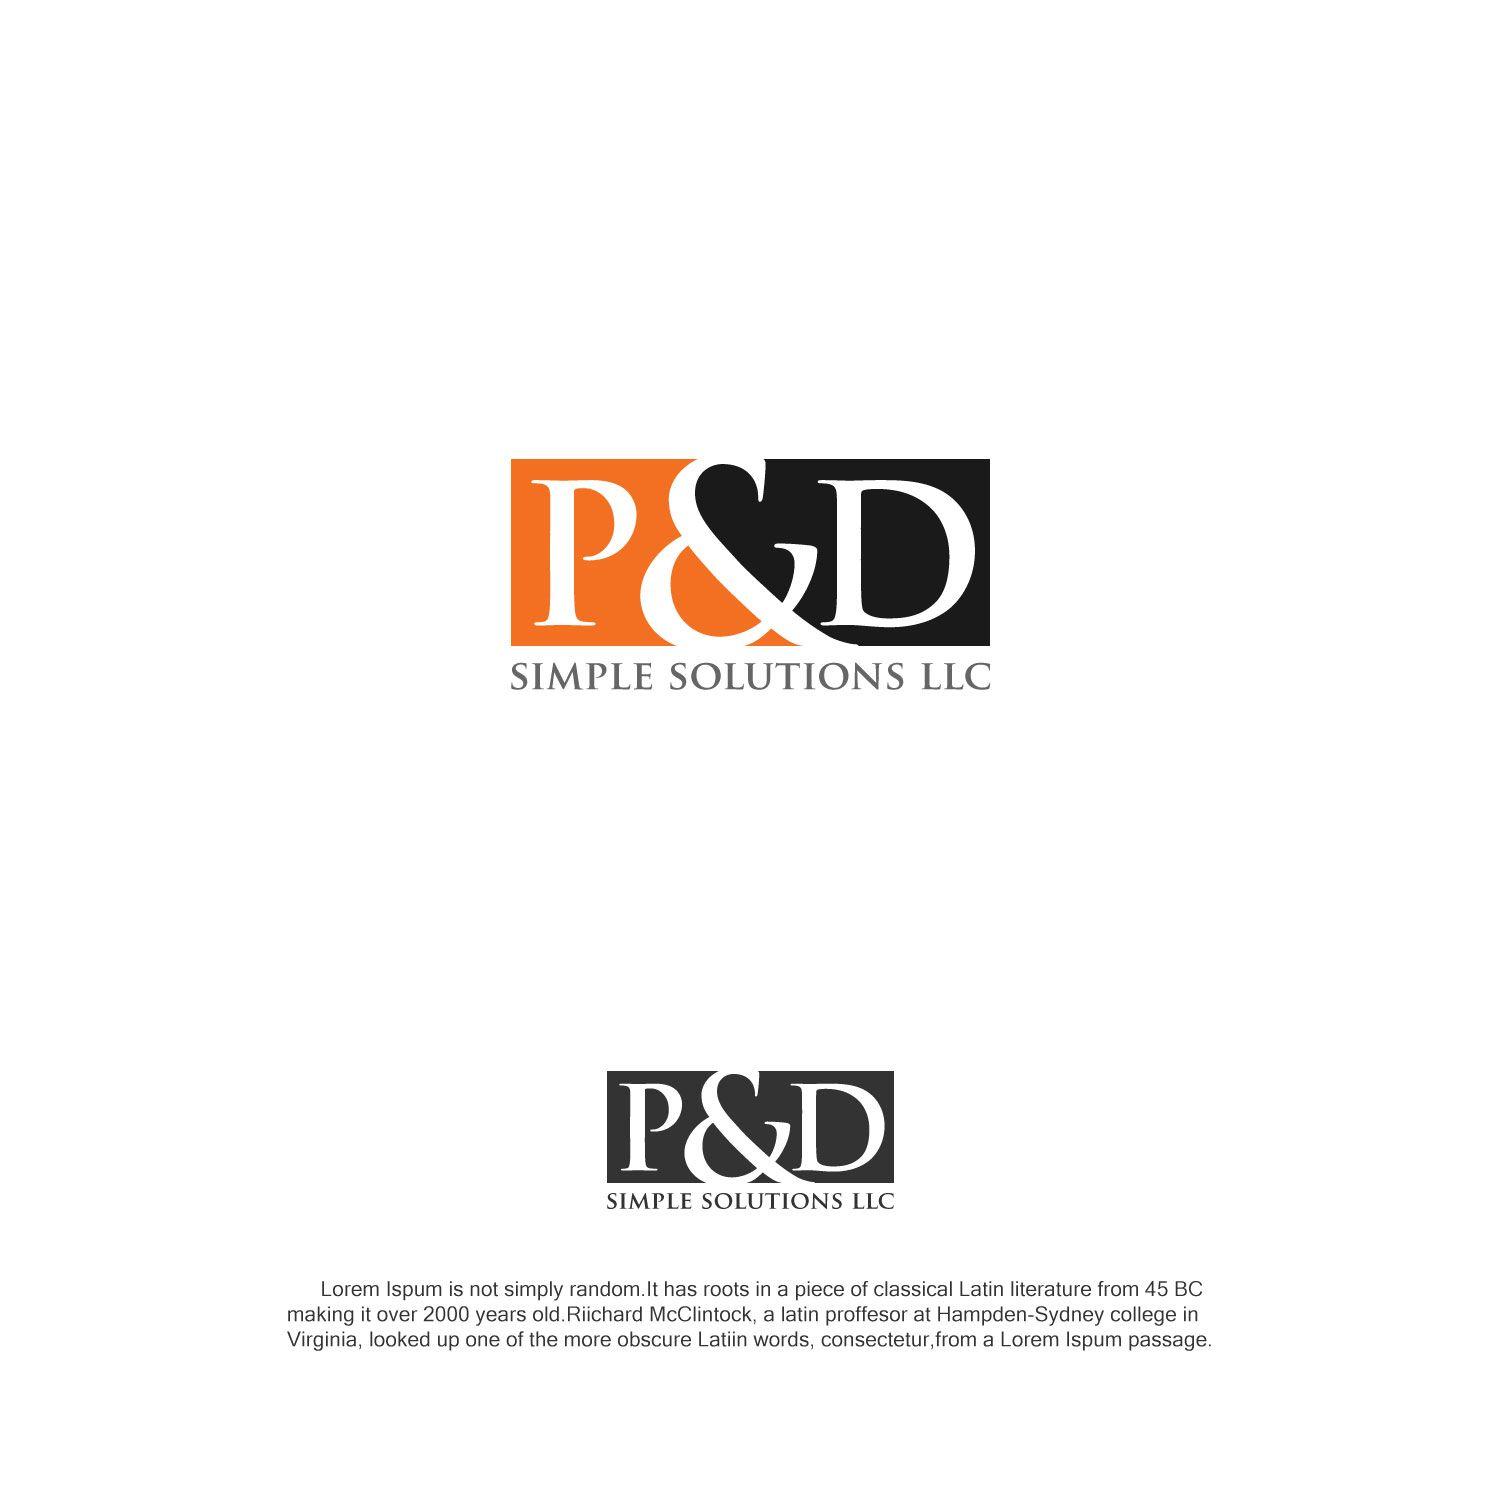 Simple Business Logo - Modern, Playful, Business Logo Design for P&D Simple Solutions LLC